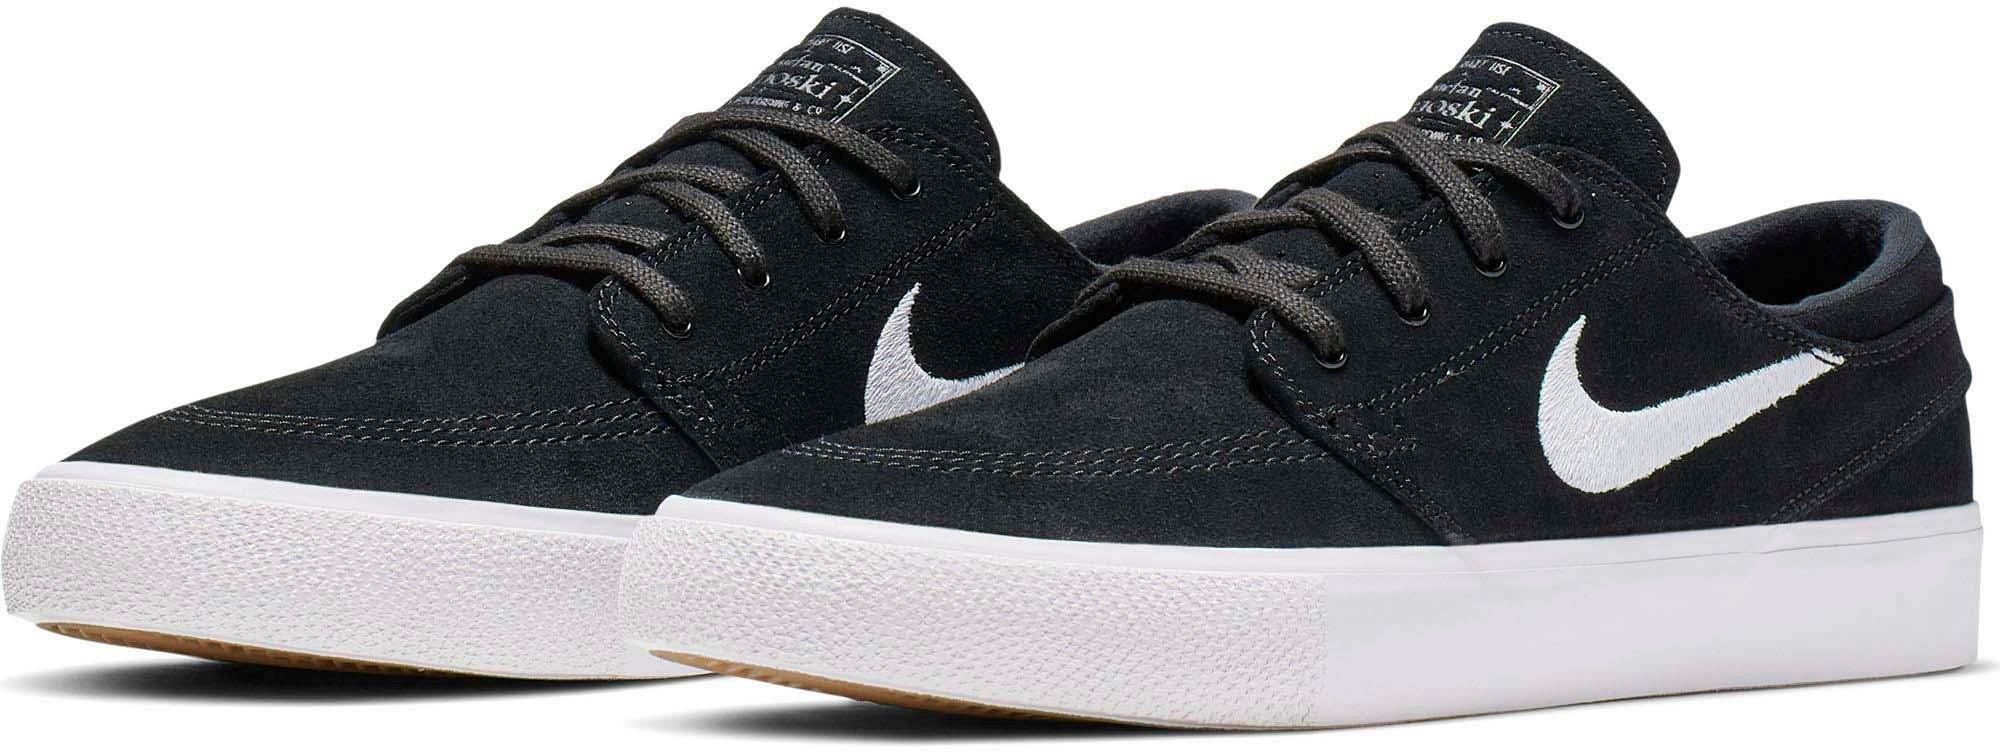 Nike SB »SB ZOOM STEFAN JANOSKI RM« Sneaker kaufen | OTTO